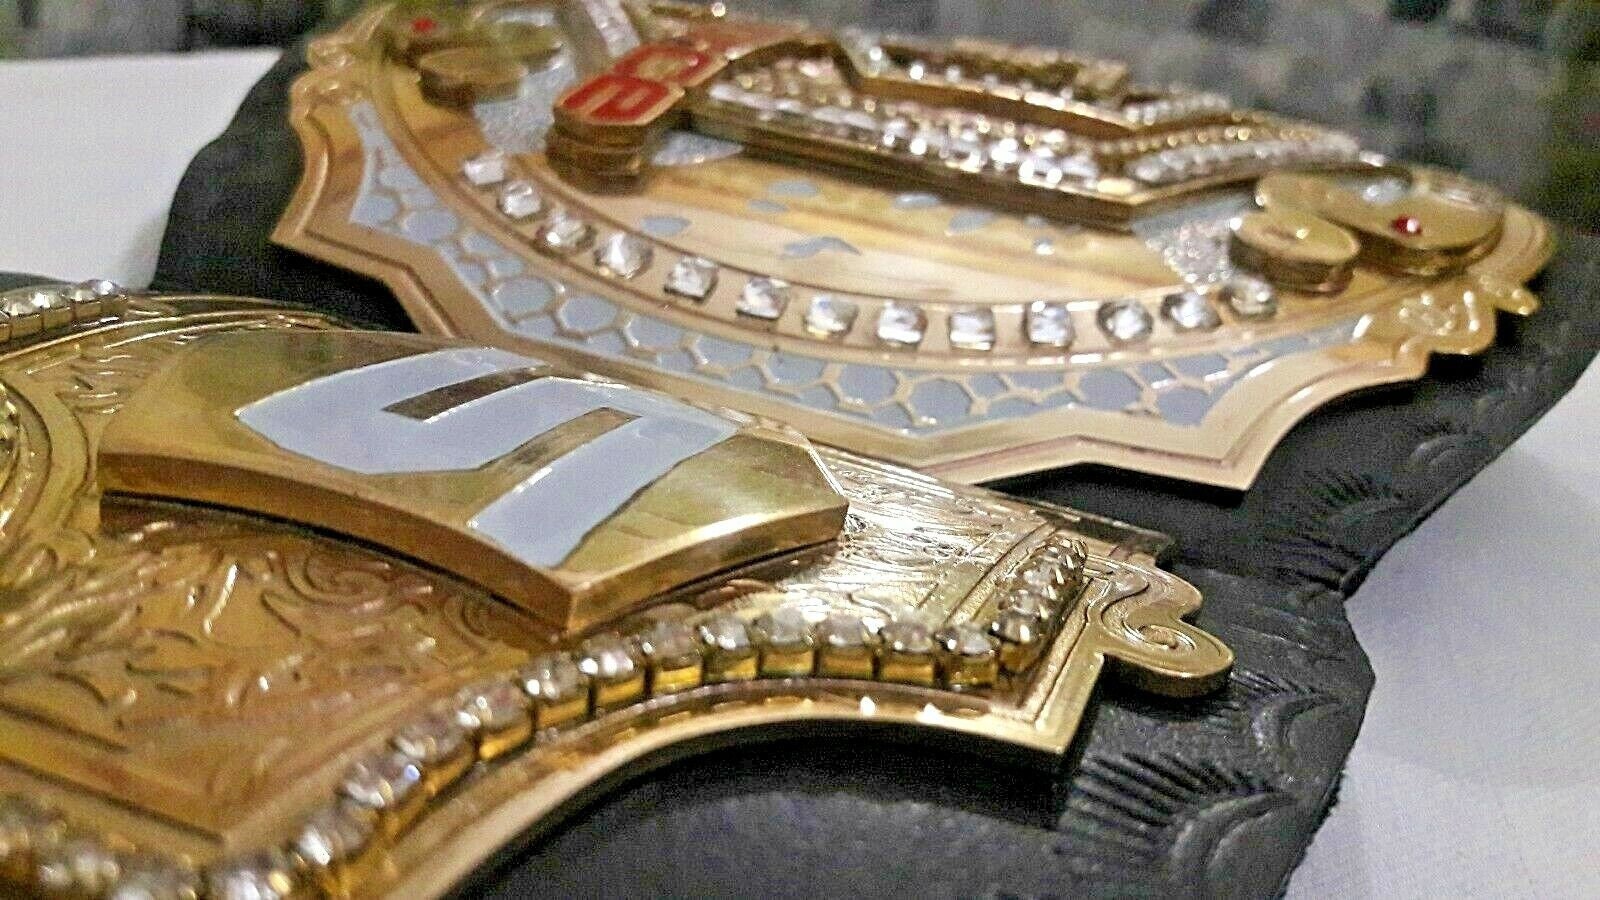 MMA UFC Strikeforce World Championship Replica Belt 